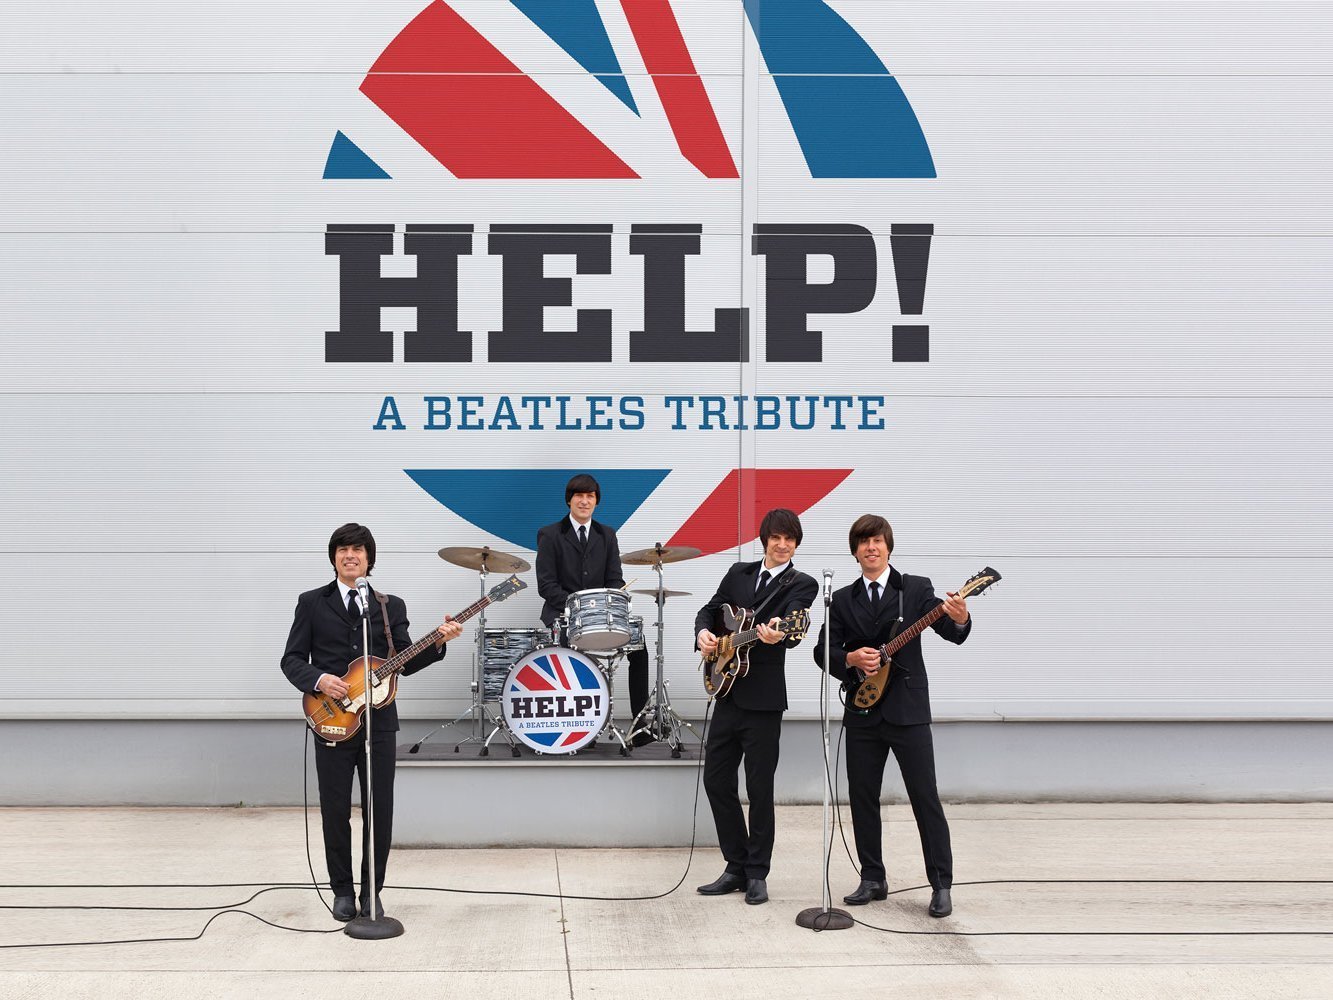 A Beatles Tribute